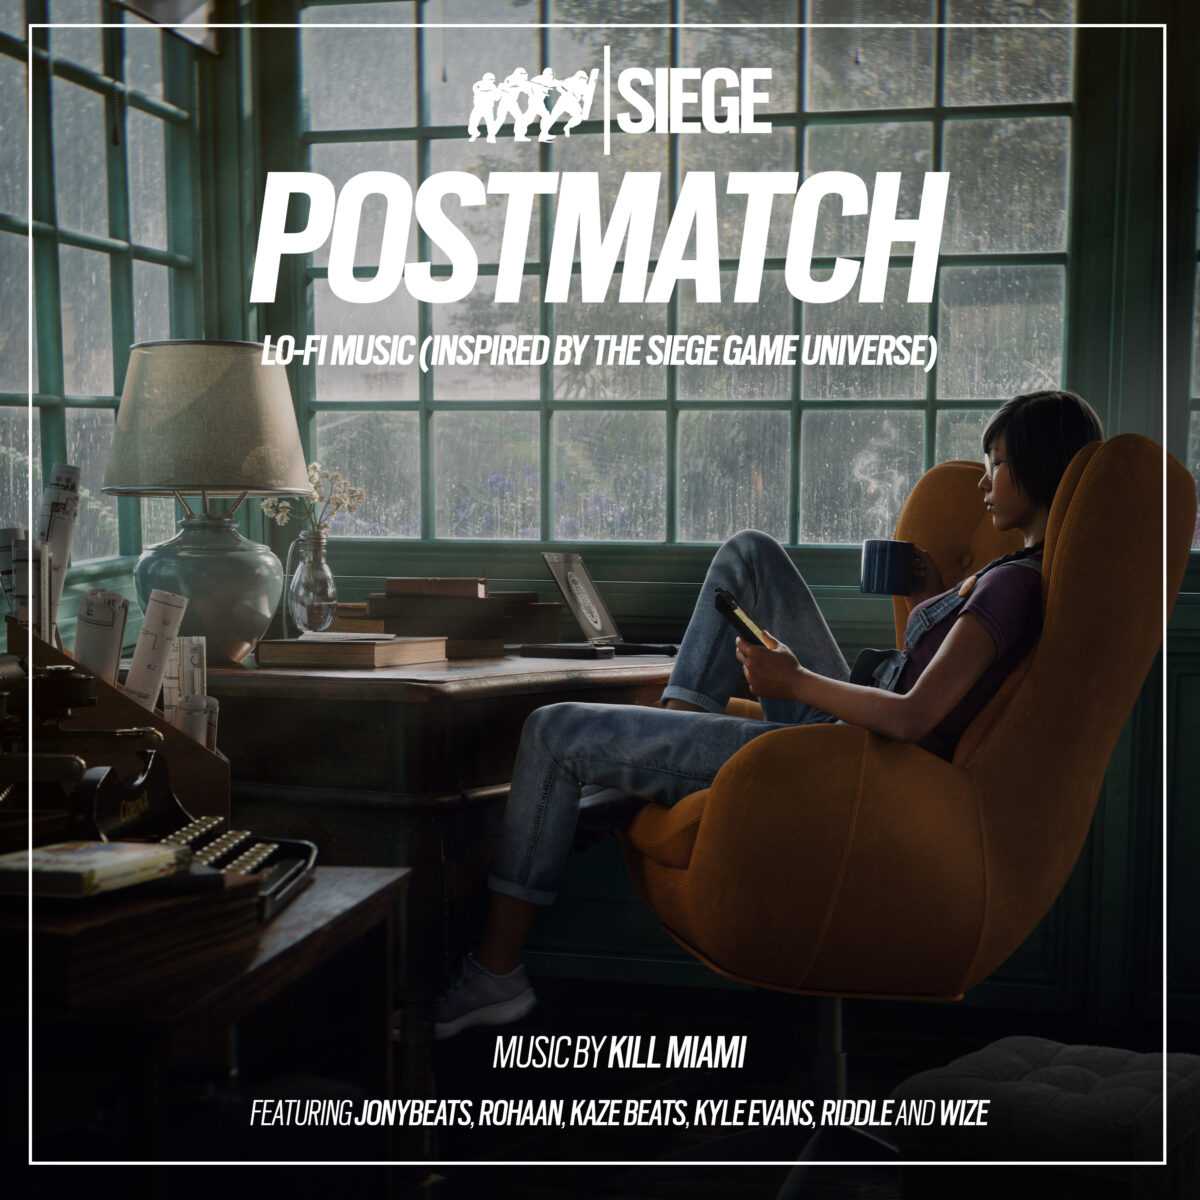 Postmatch music Album